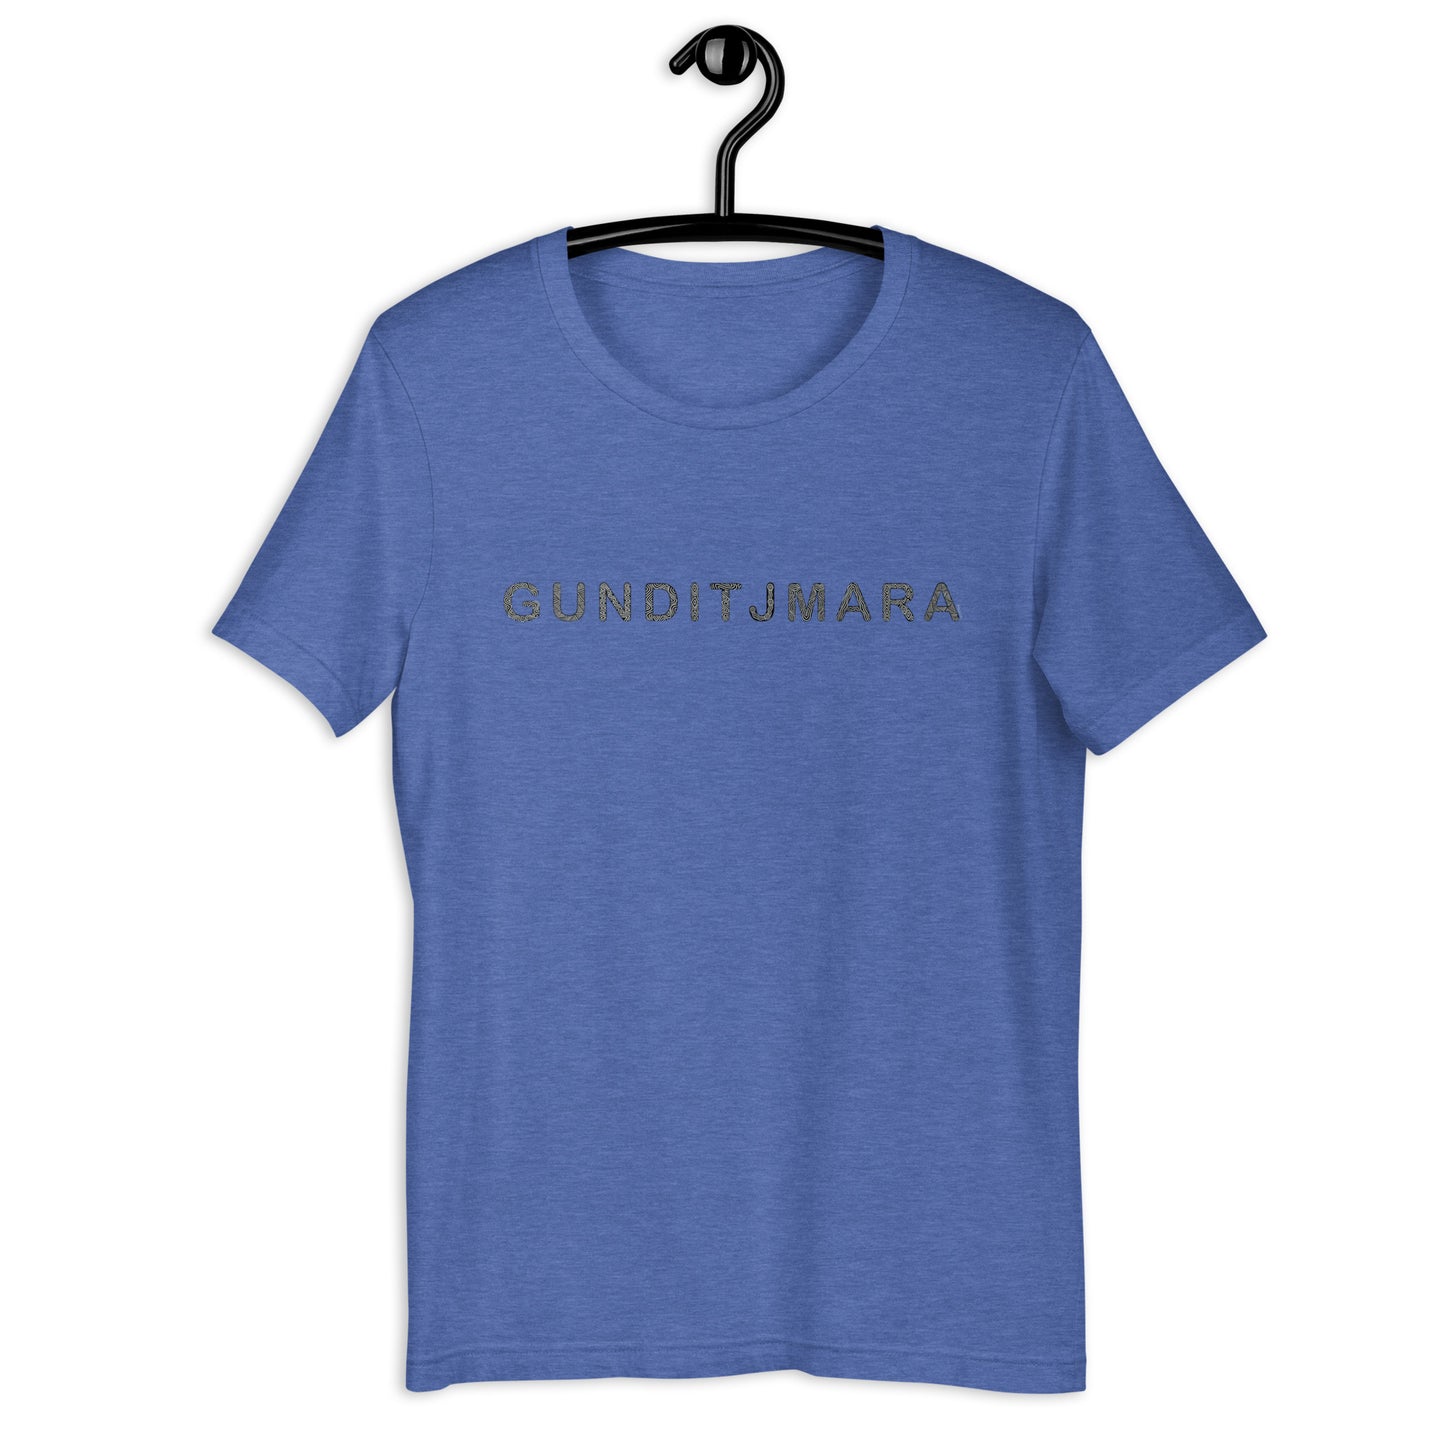 Gunditjmara Plus Size T-Shirt (Unisex)